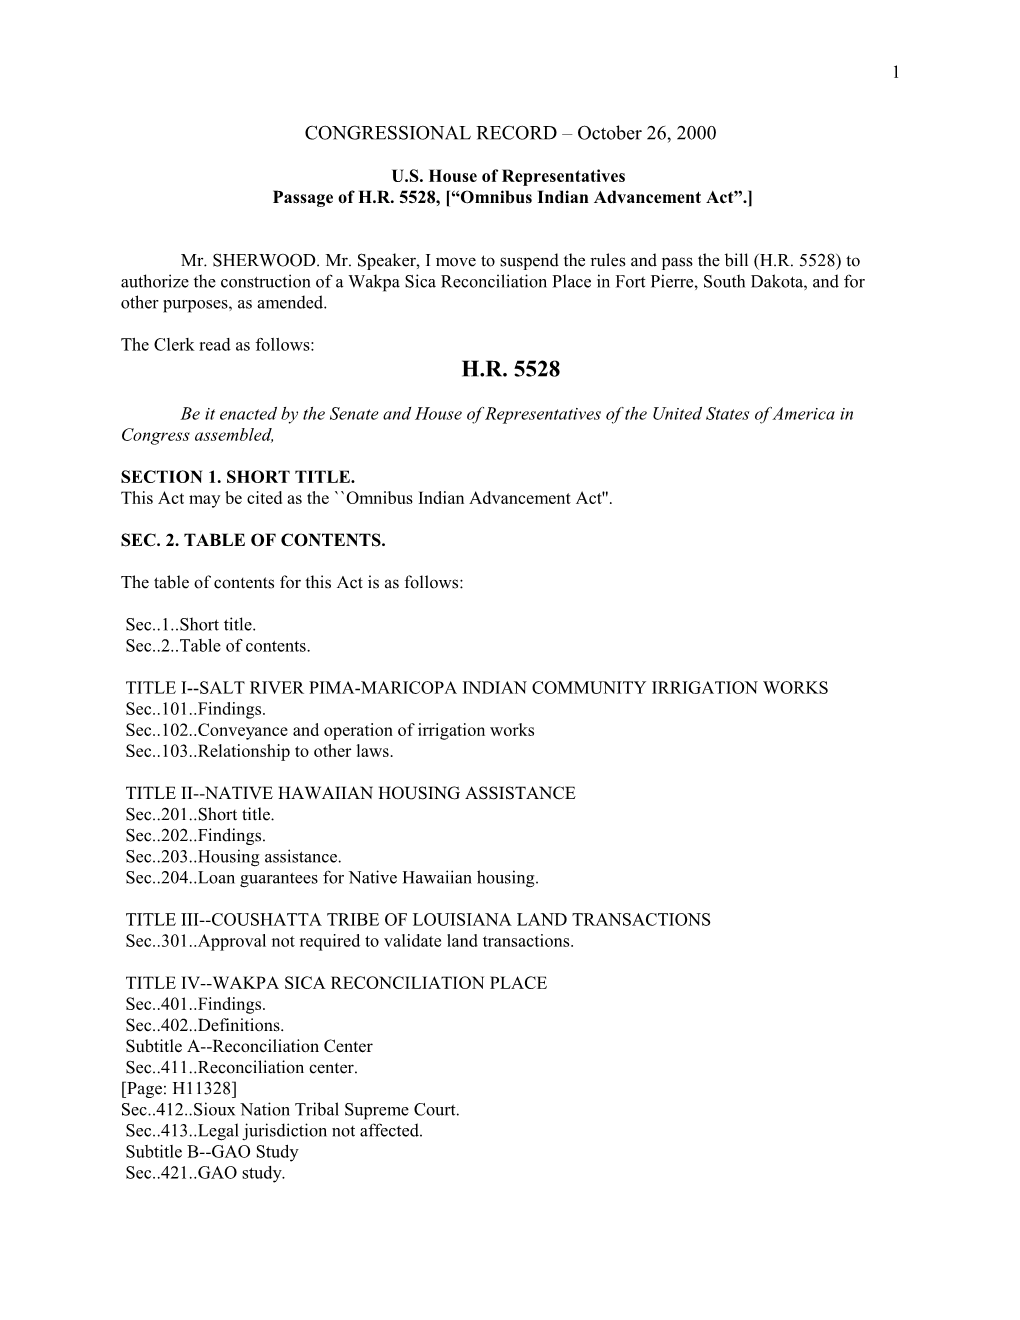 Passage of H.R. 5528, Omnibus Indian Advancement Act